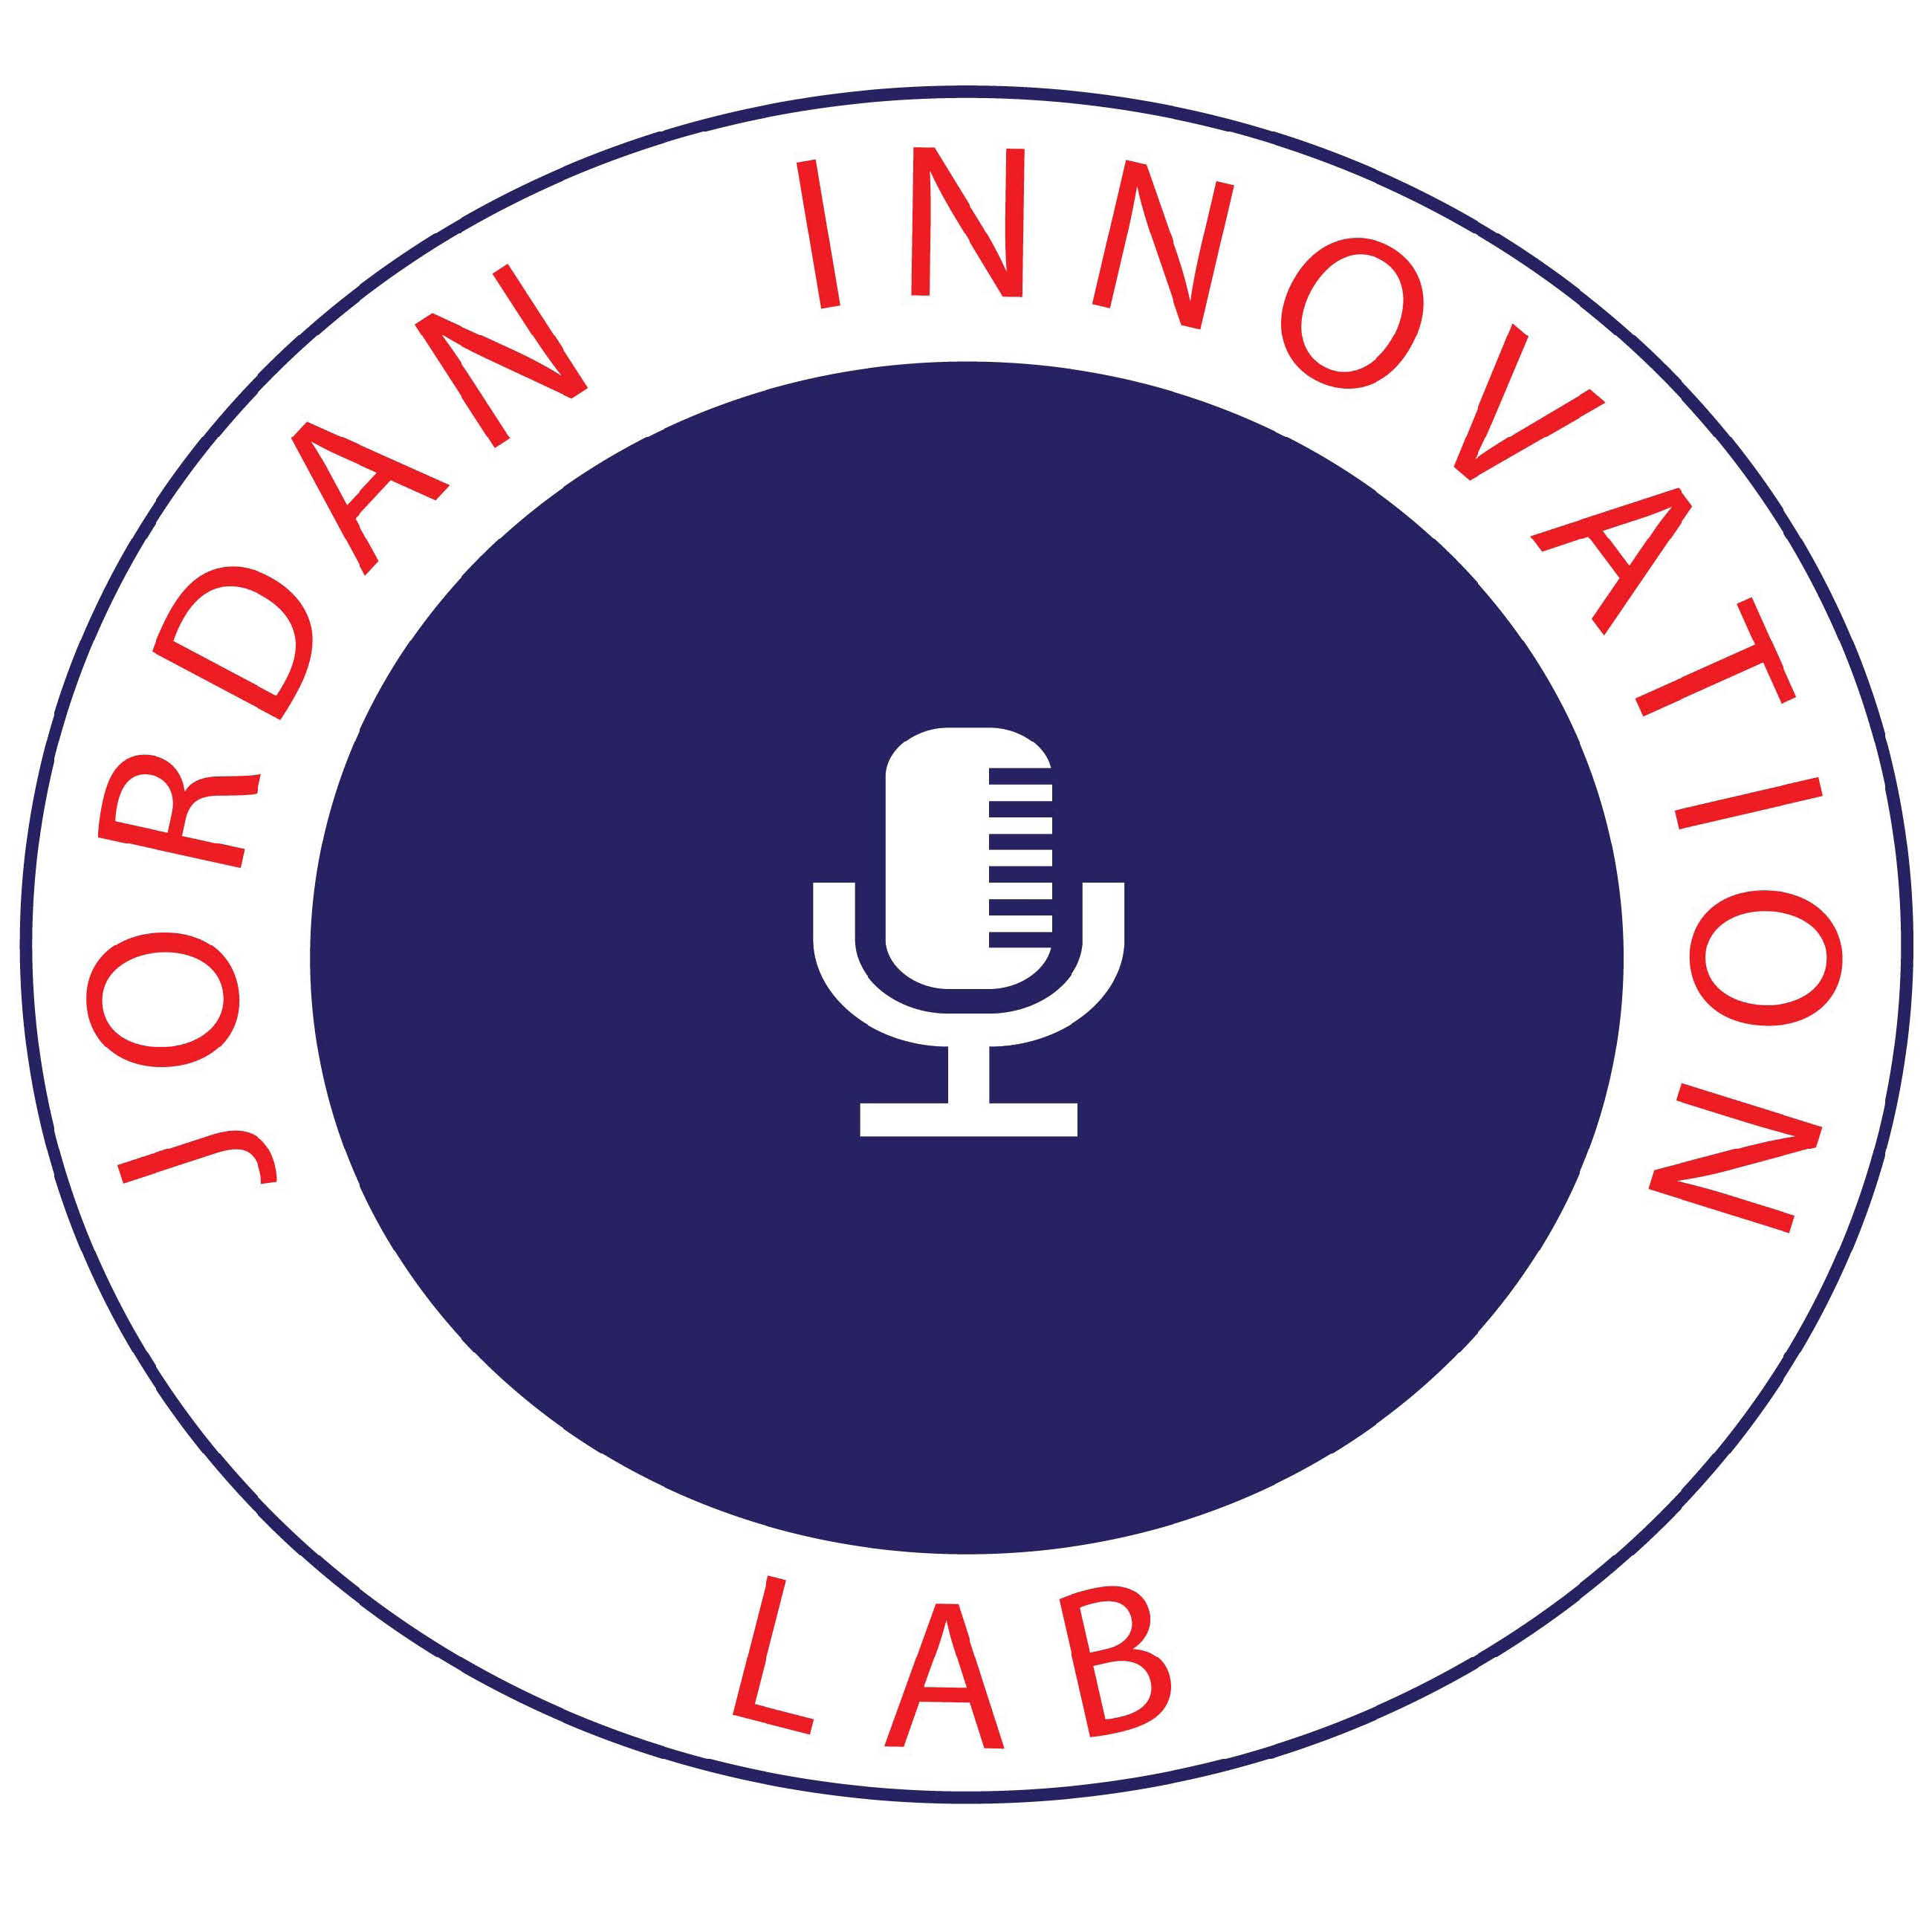 The Jordan Innovation Lab